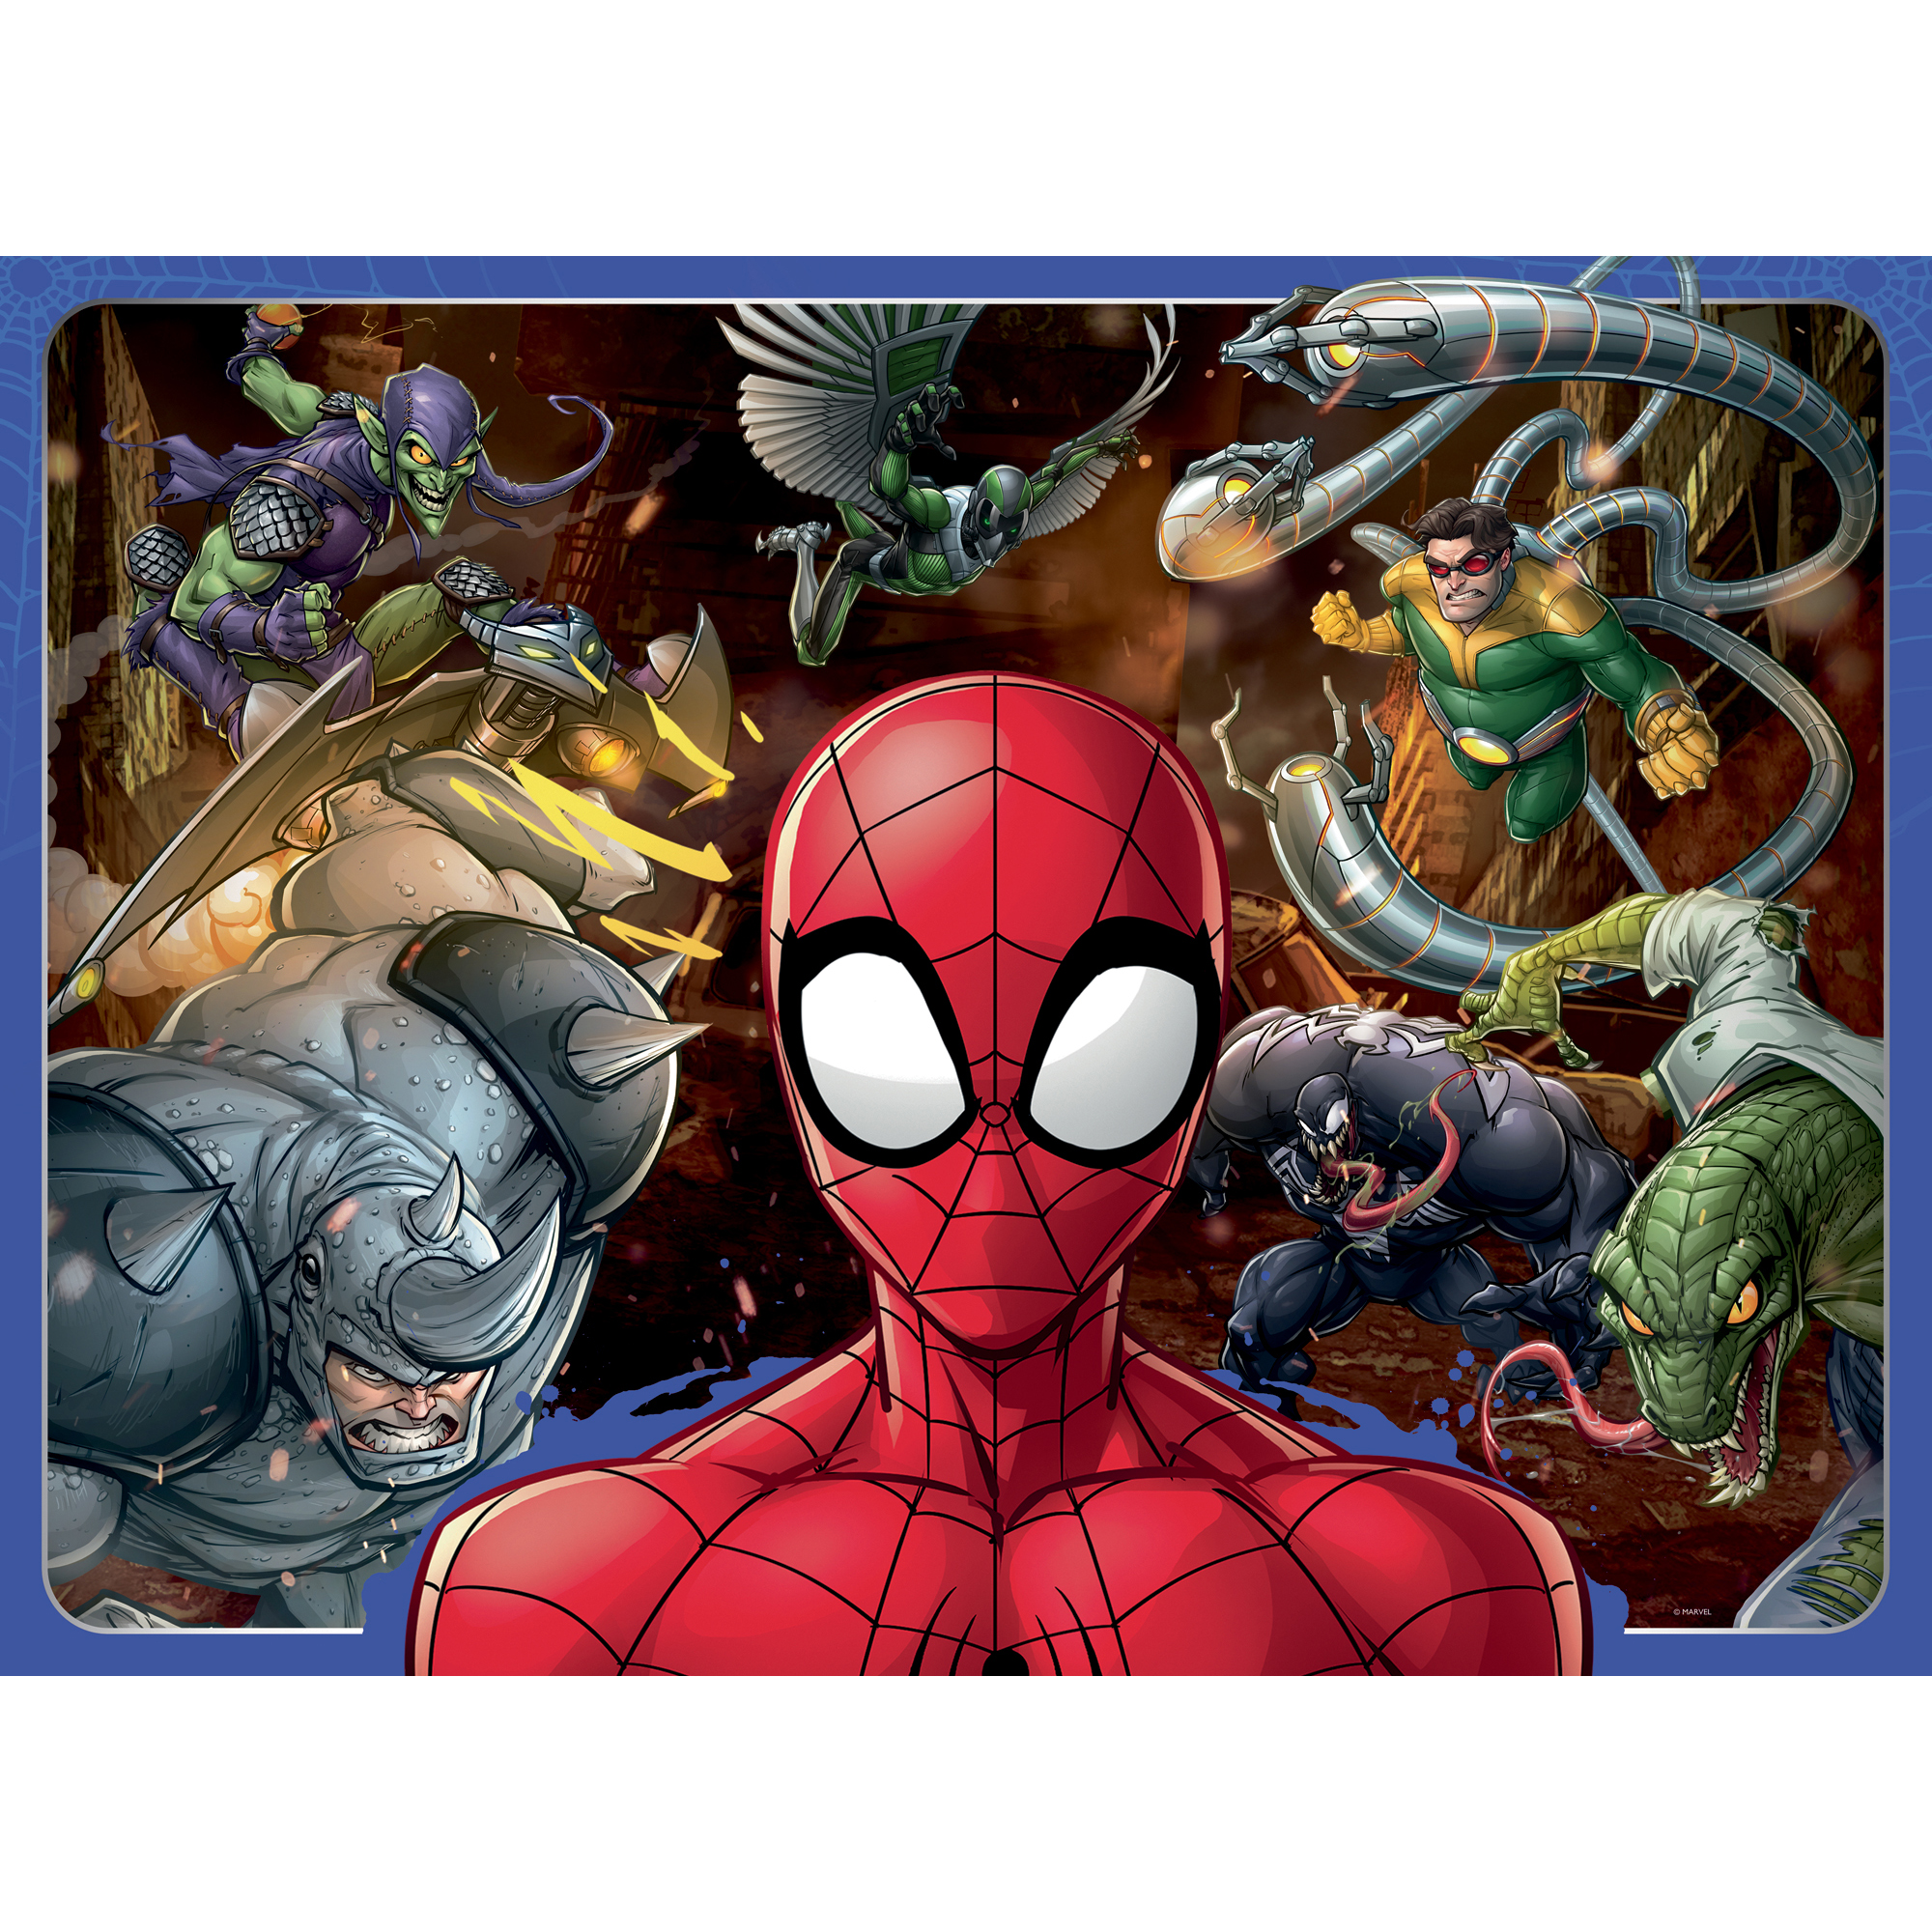 Ravensburger puzzle super 100 Spiderman - Ravensburger